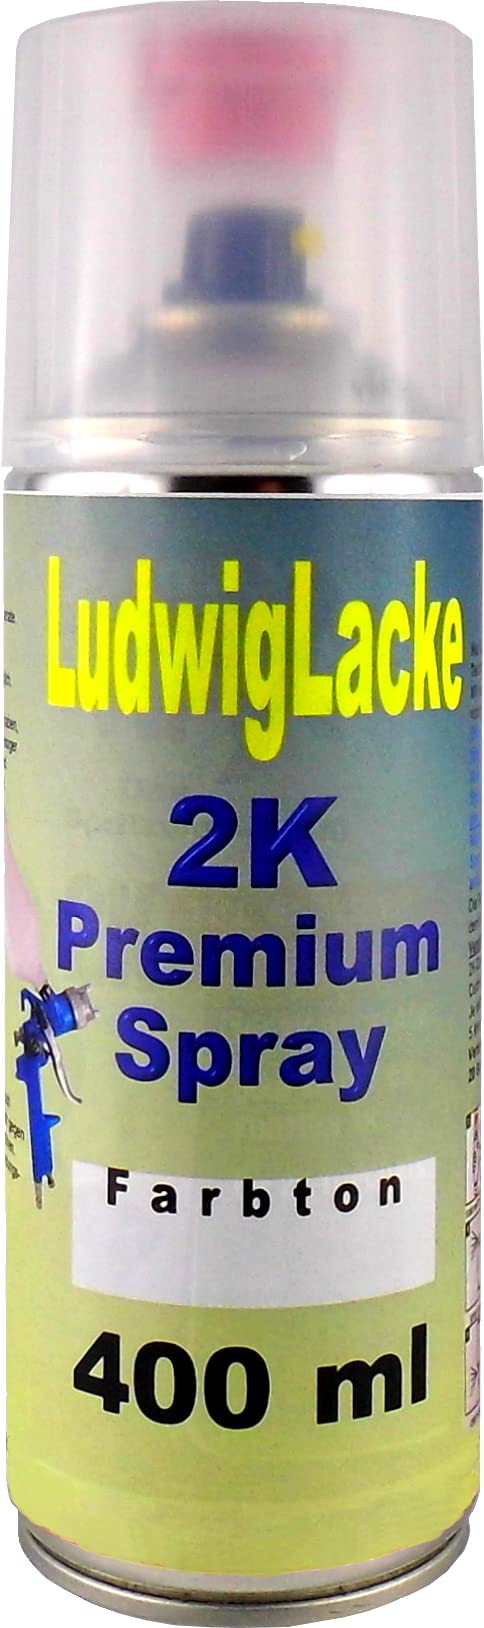 RAL 9016 VERKEHRSWEISS 2K Premium Spray MATT 400ml von Ludwiglacke